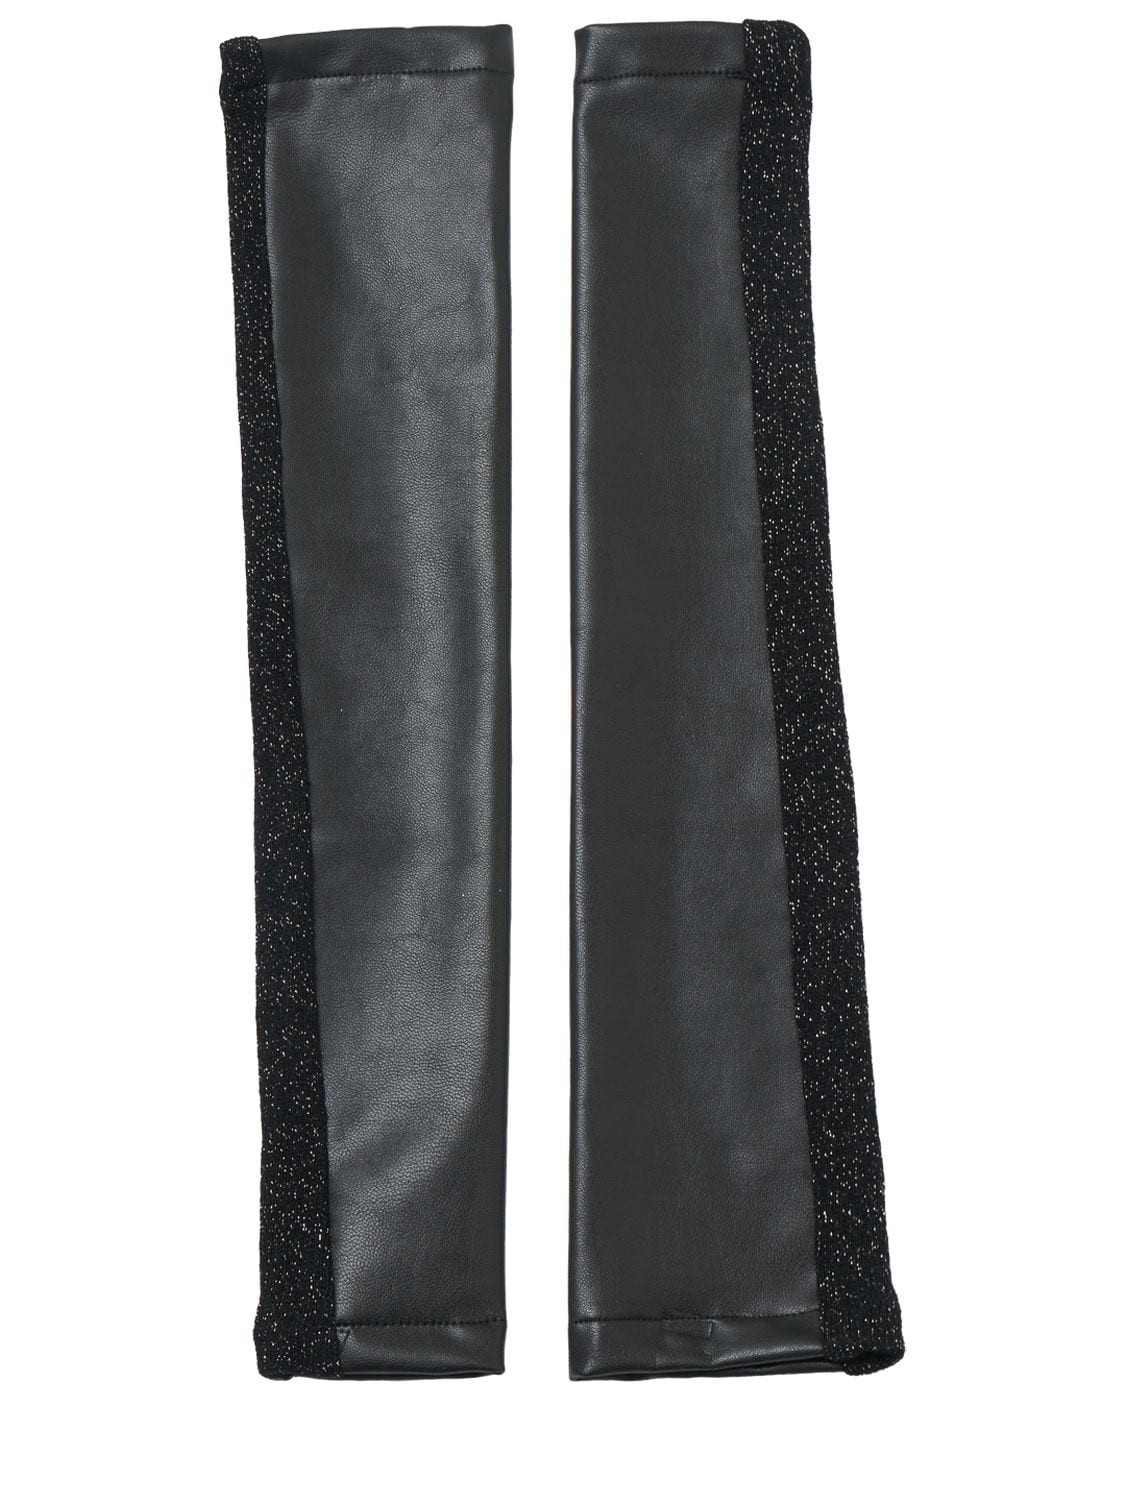 Shop Monnalisa Lurex Blend Wool & Faux Leather Top In Black